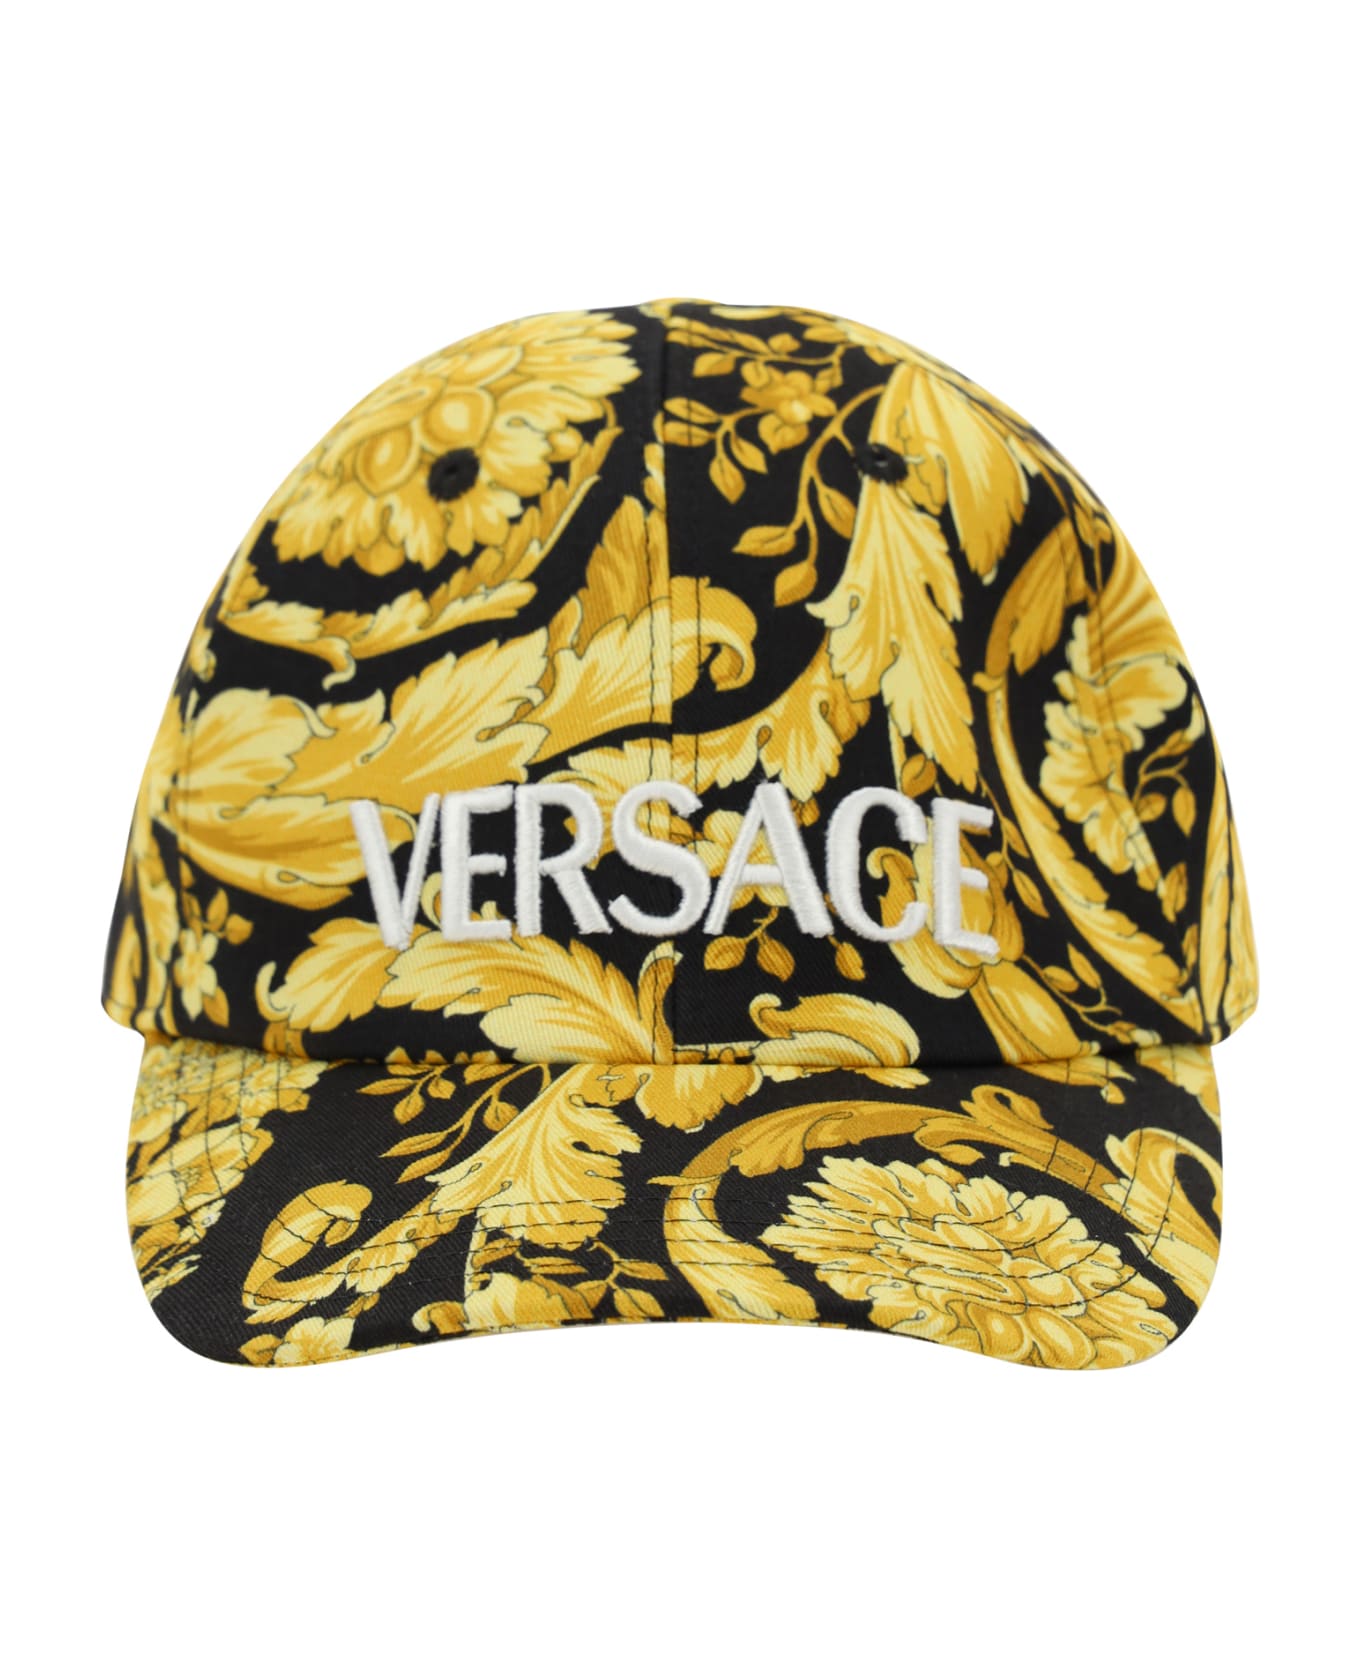 Versace Baseball Cap - Black/gold/black